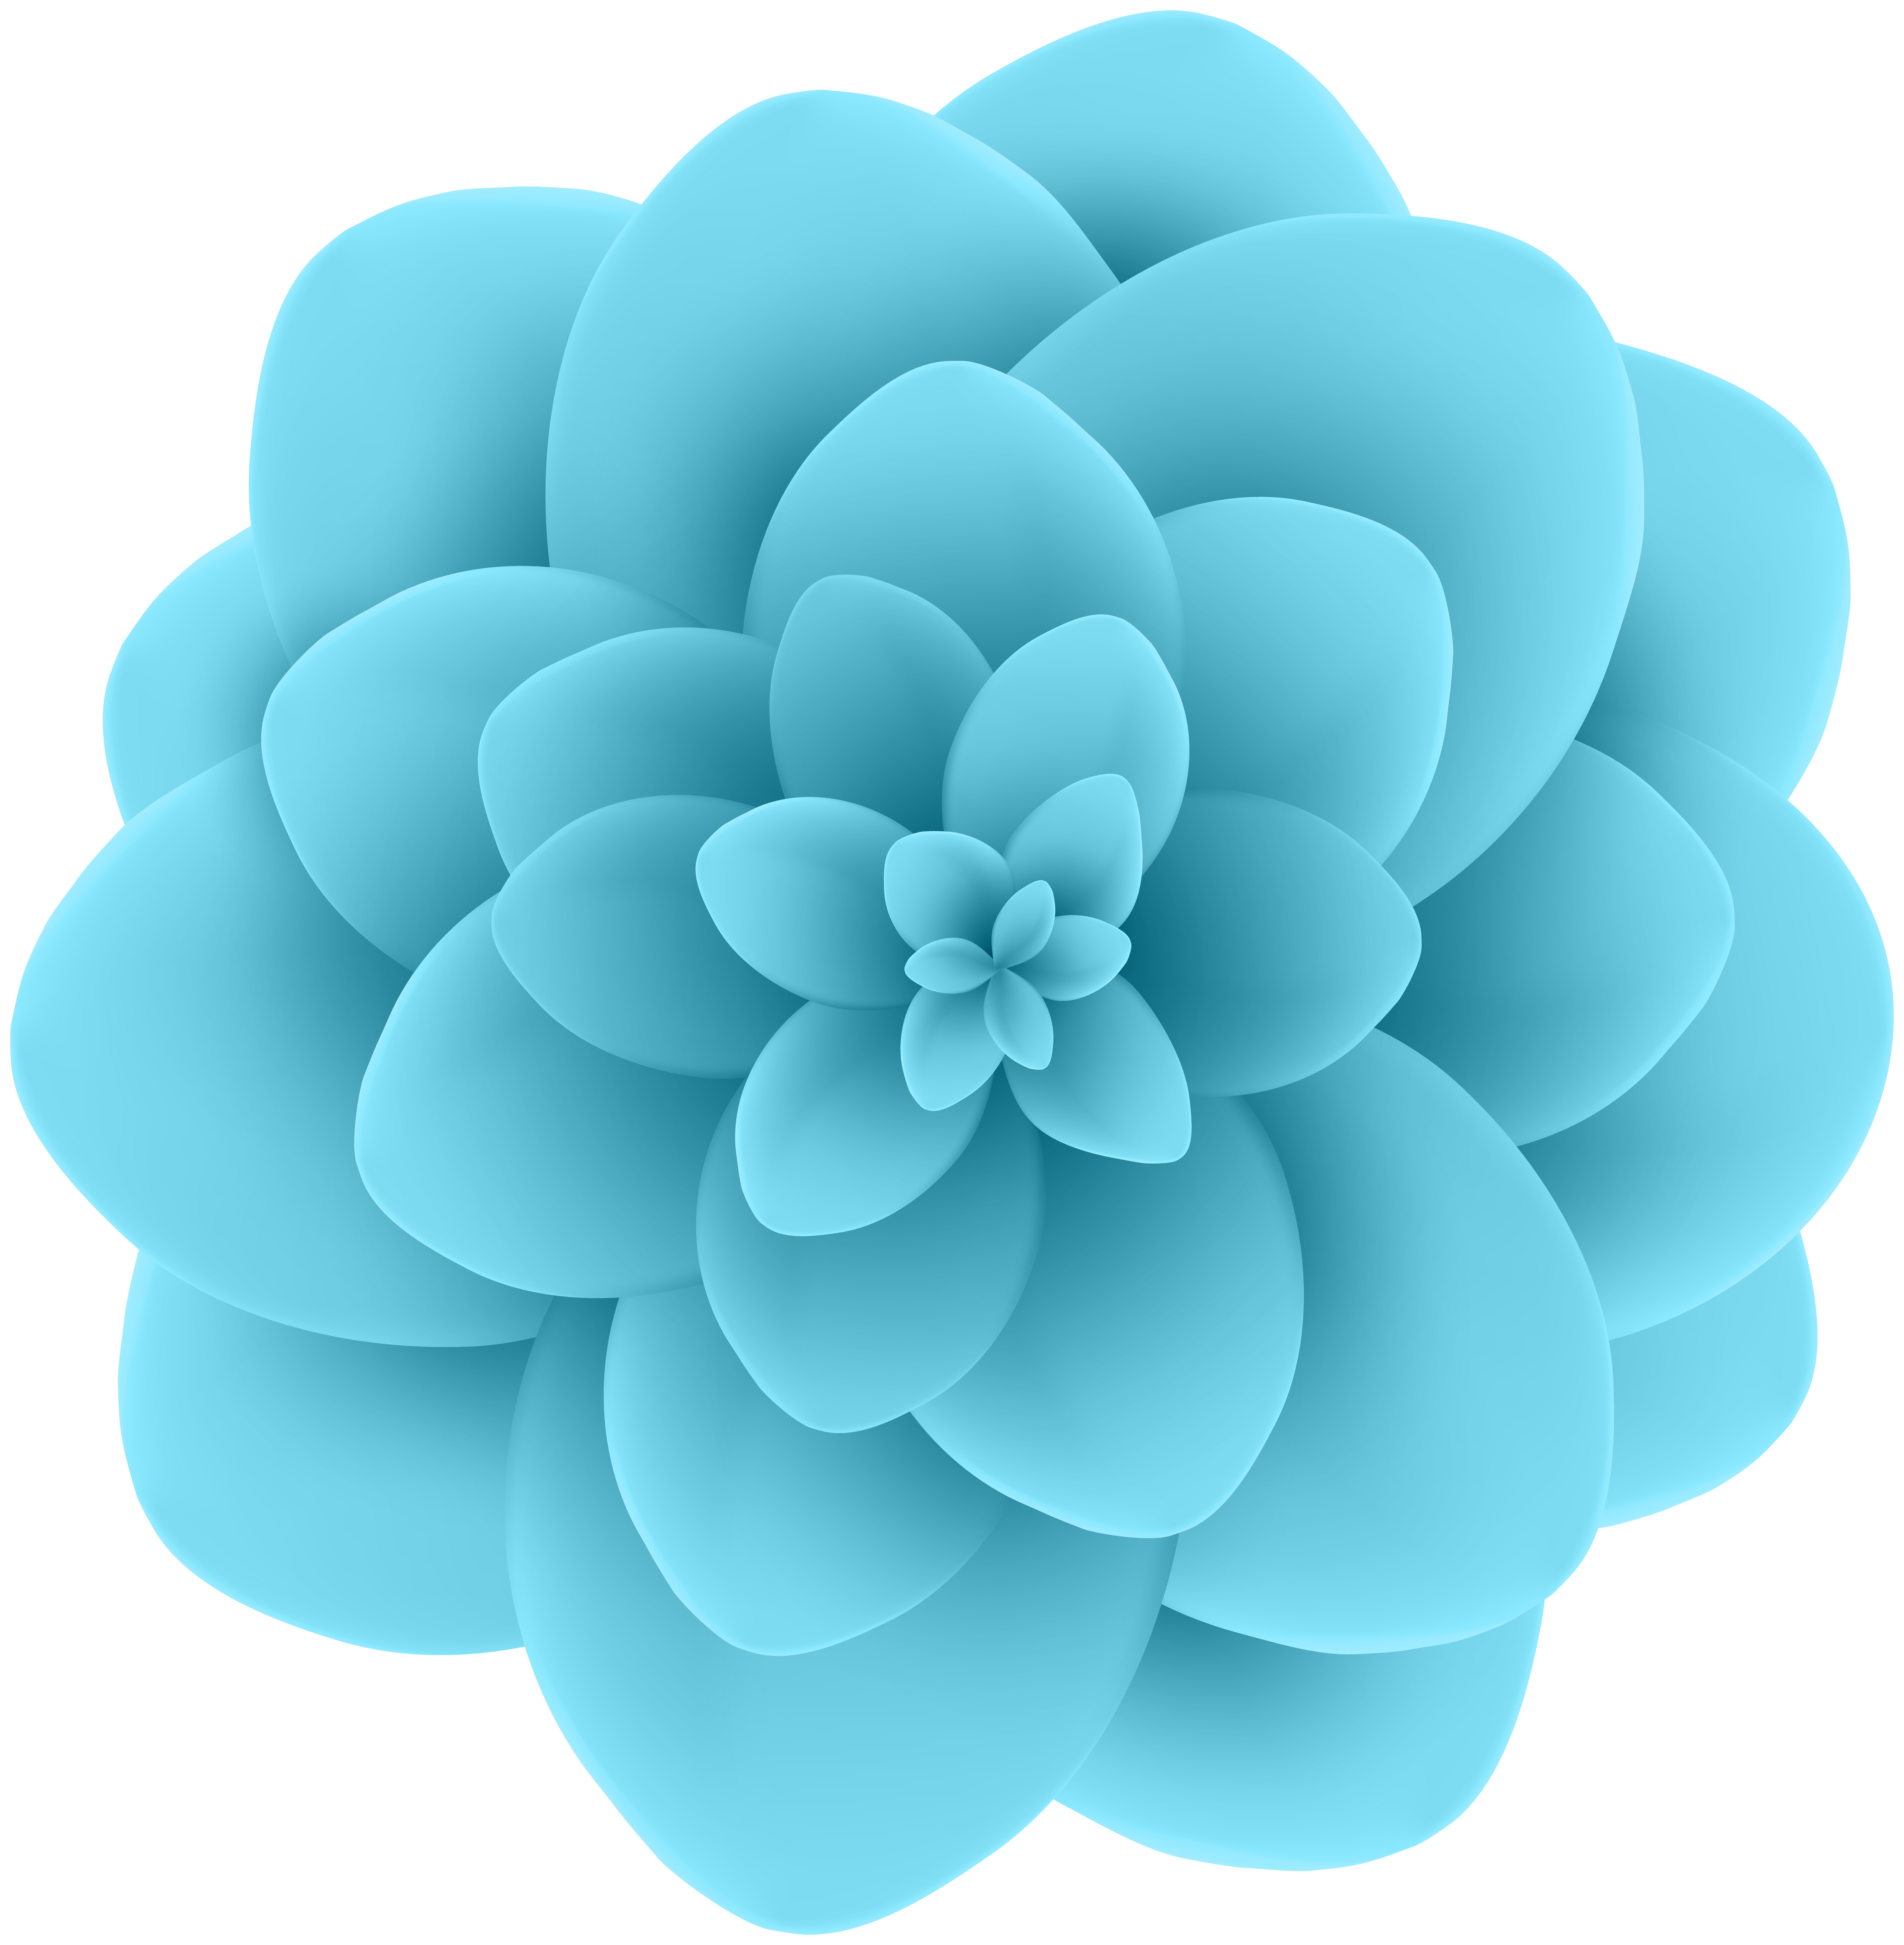 Deco Blue Flower Transparent Clip Art Image | Gallery Yopriceville